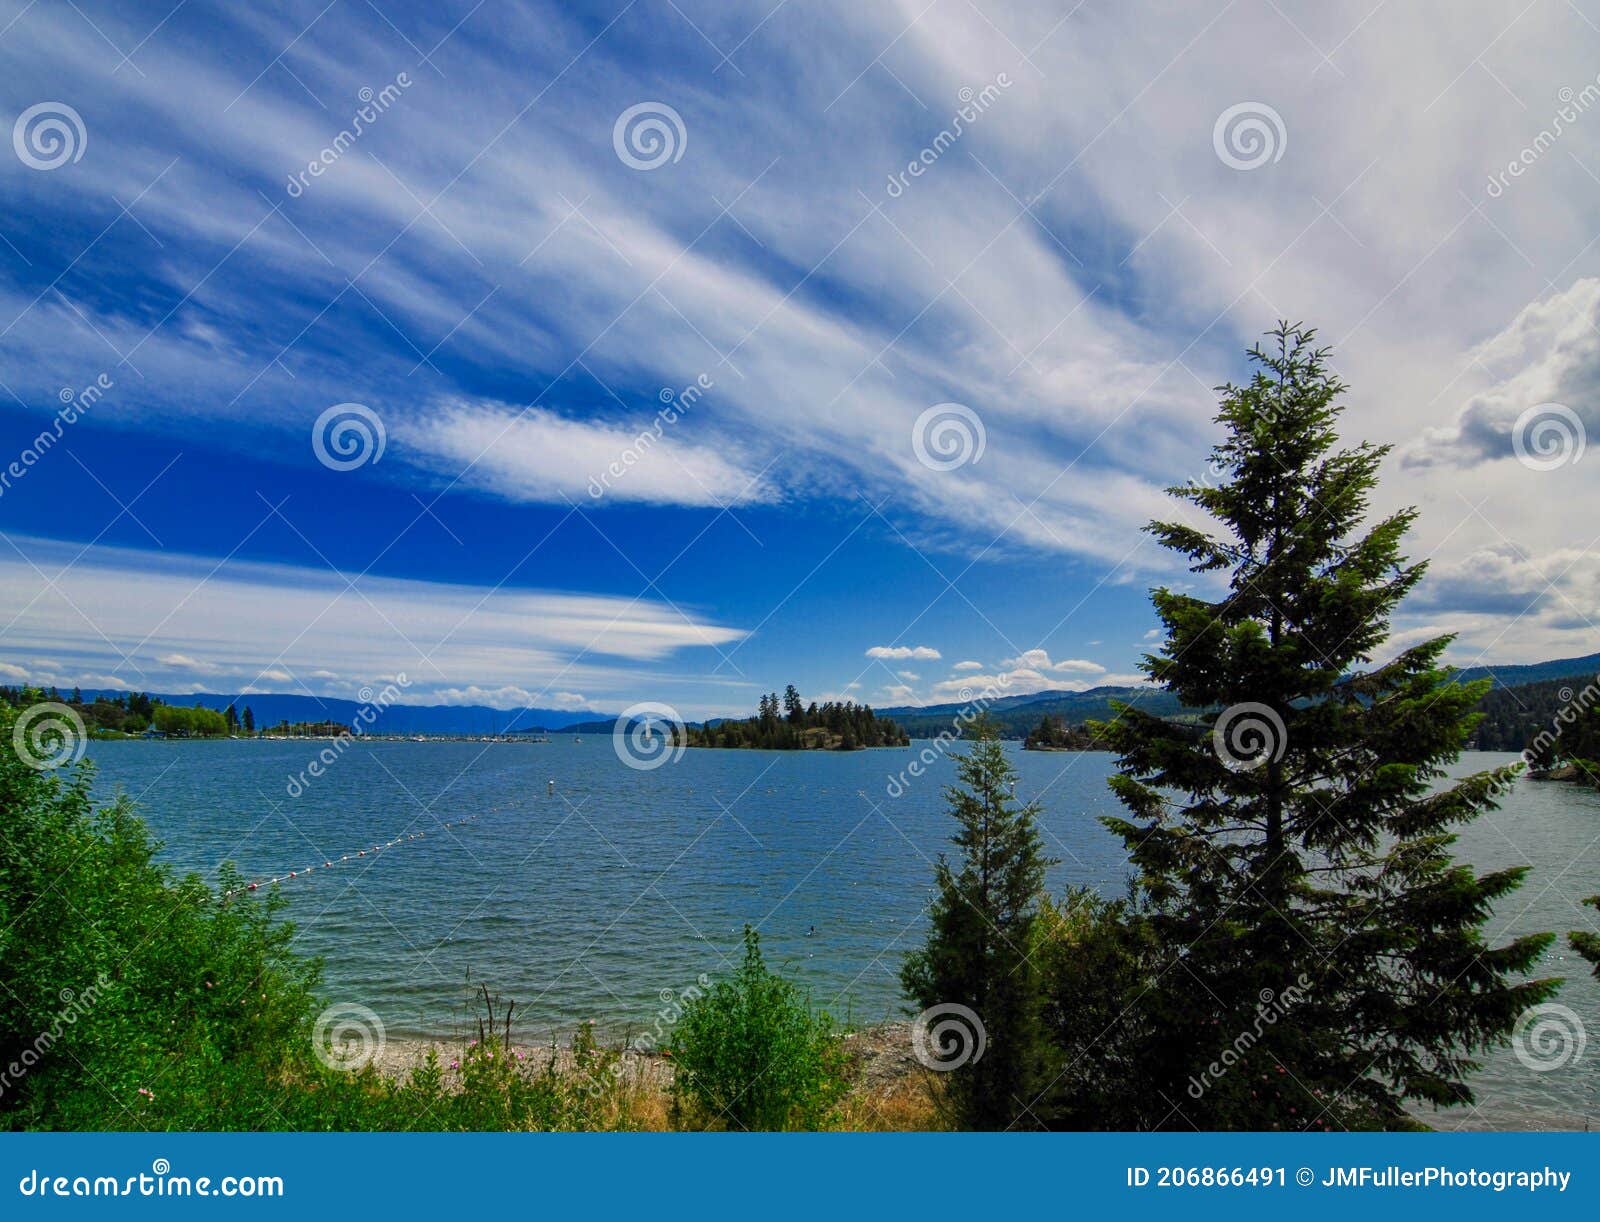 clouds over flathead lake near kalispell, montana